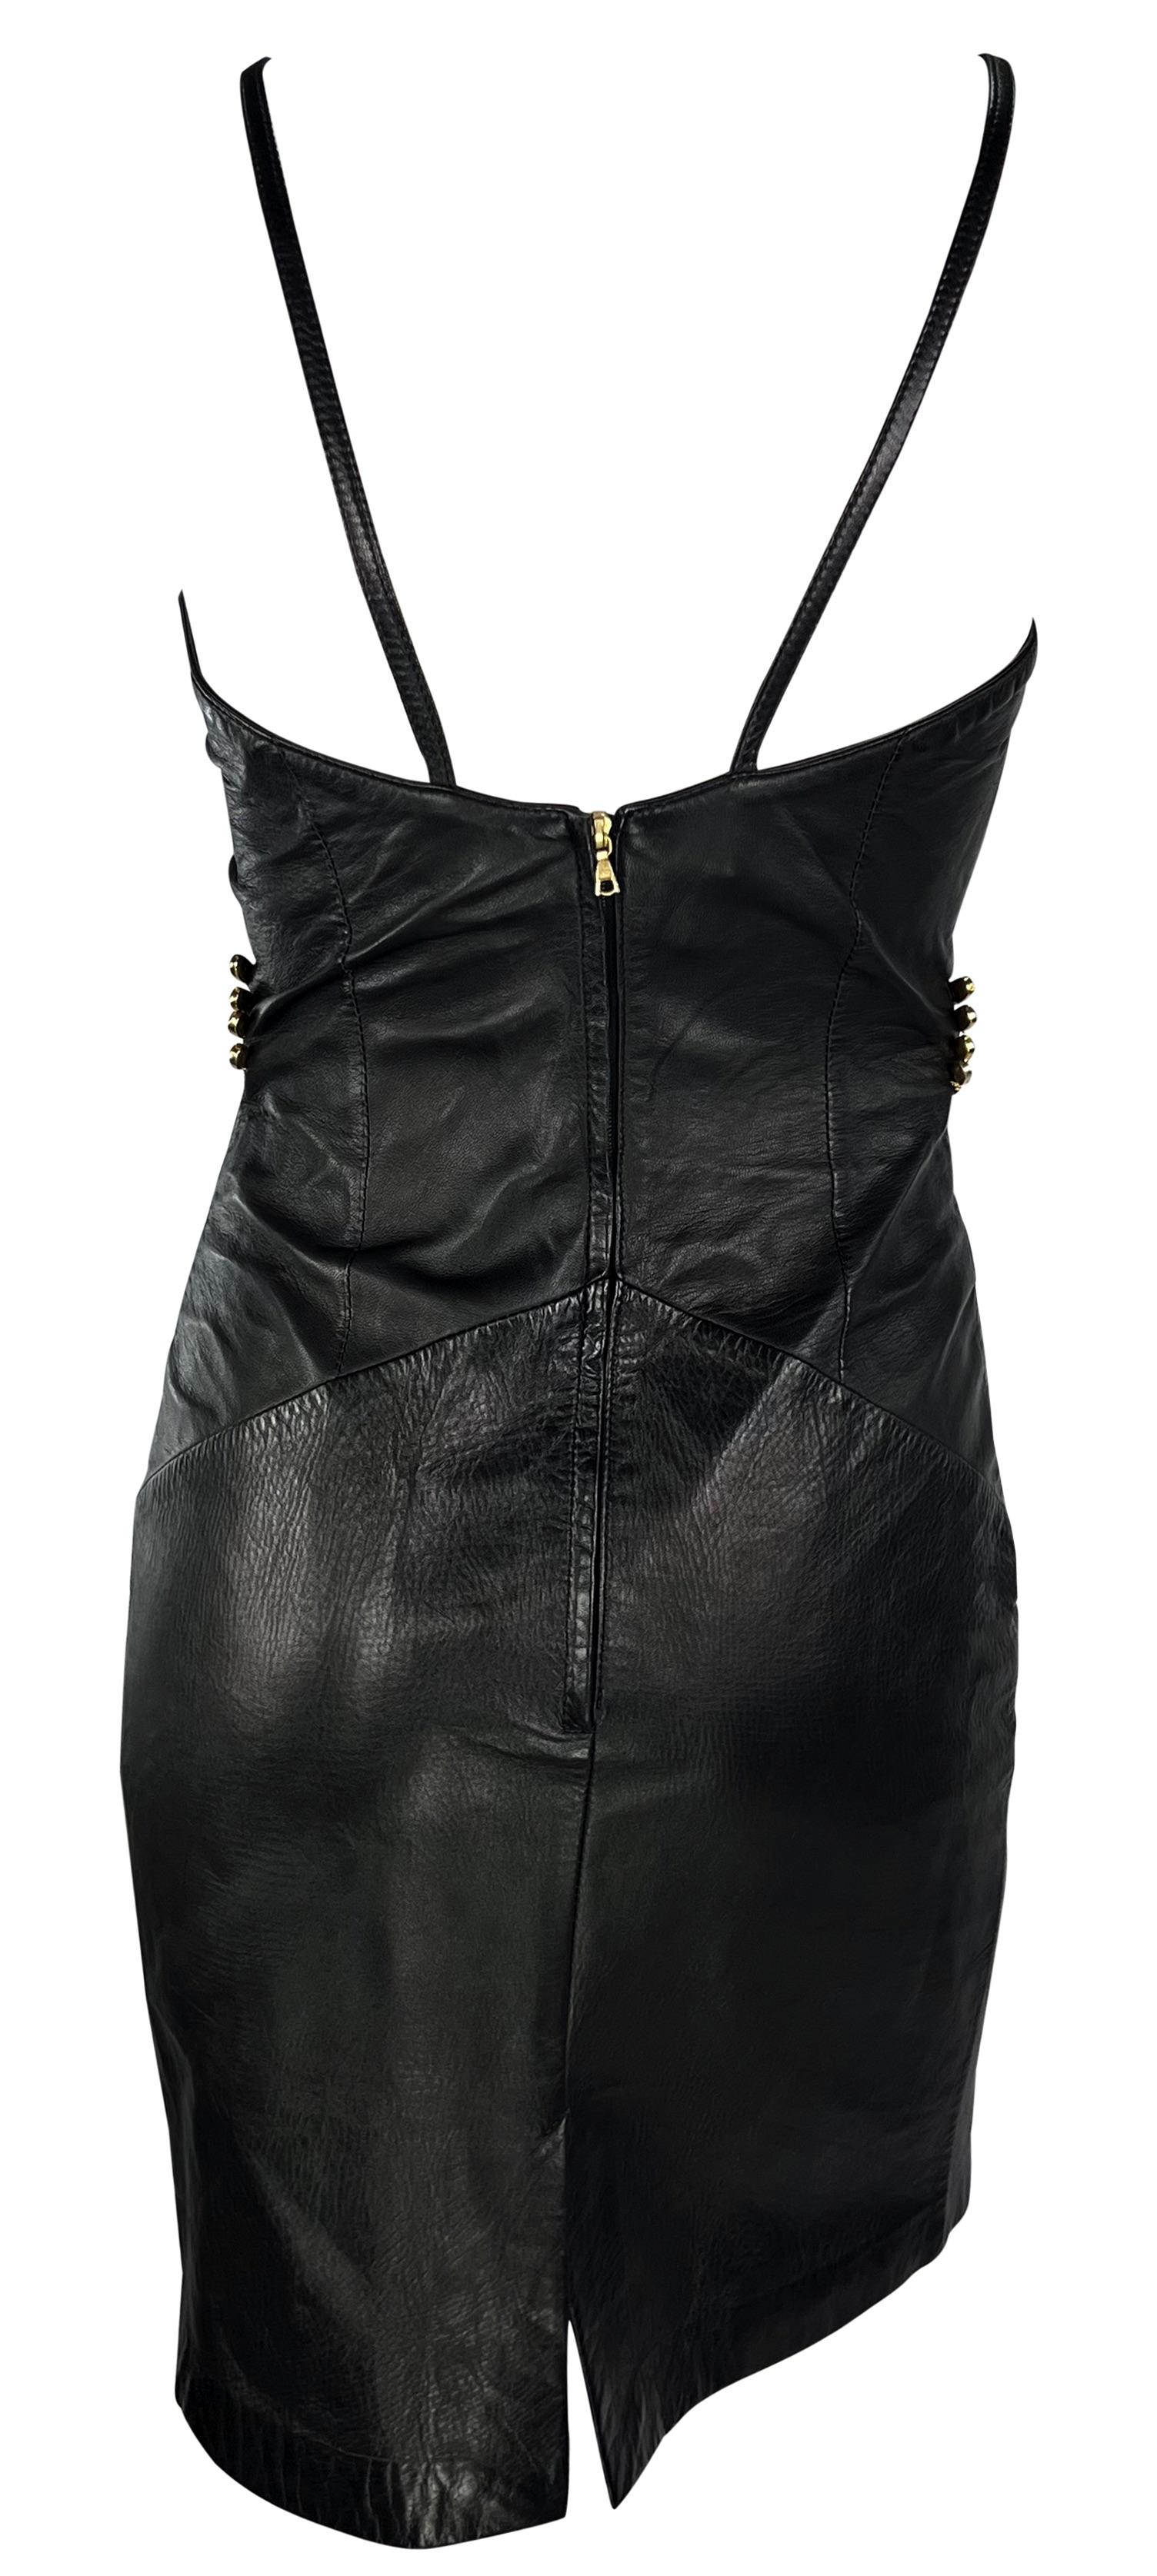 S/S 1995 Gianfranco Ferré Rhinestone Gold Corset Boned Black Leather Mini Dress For Sale 2